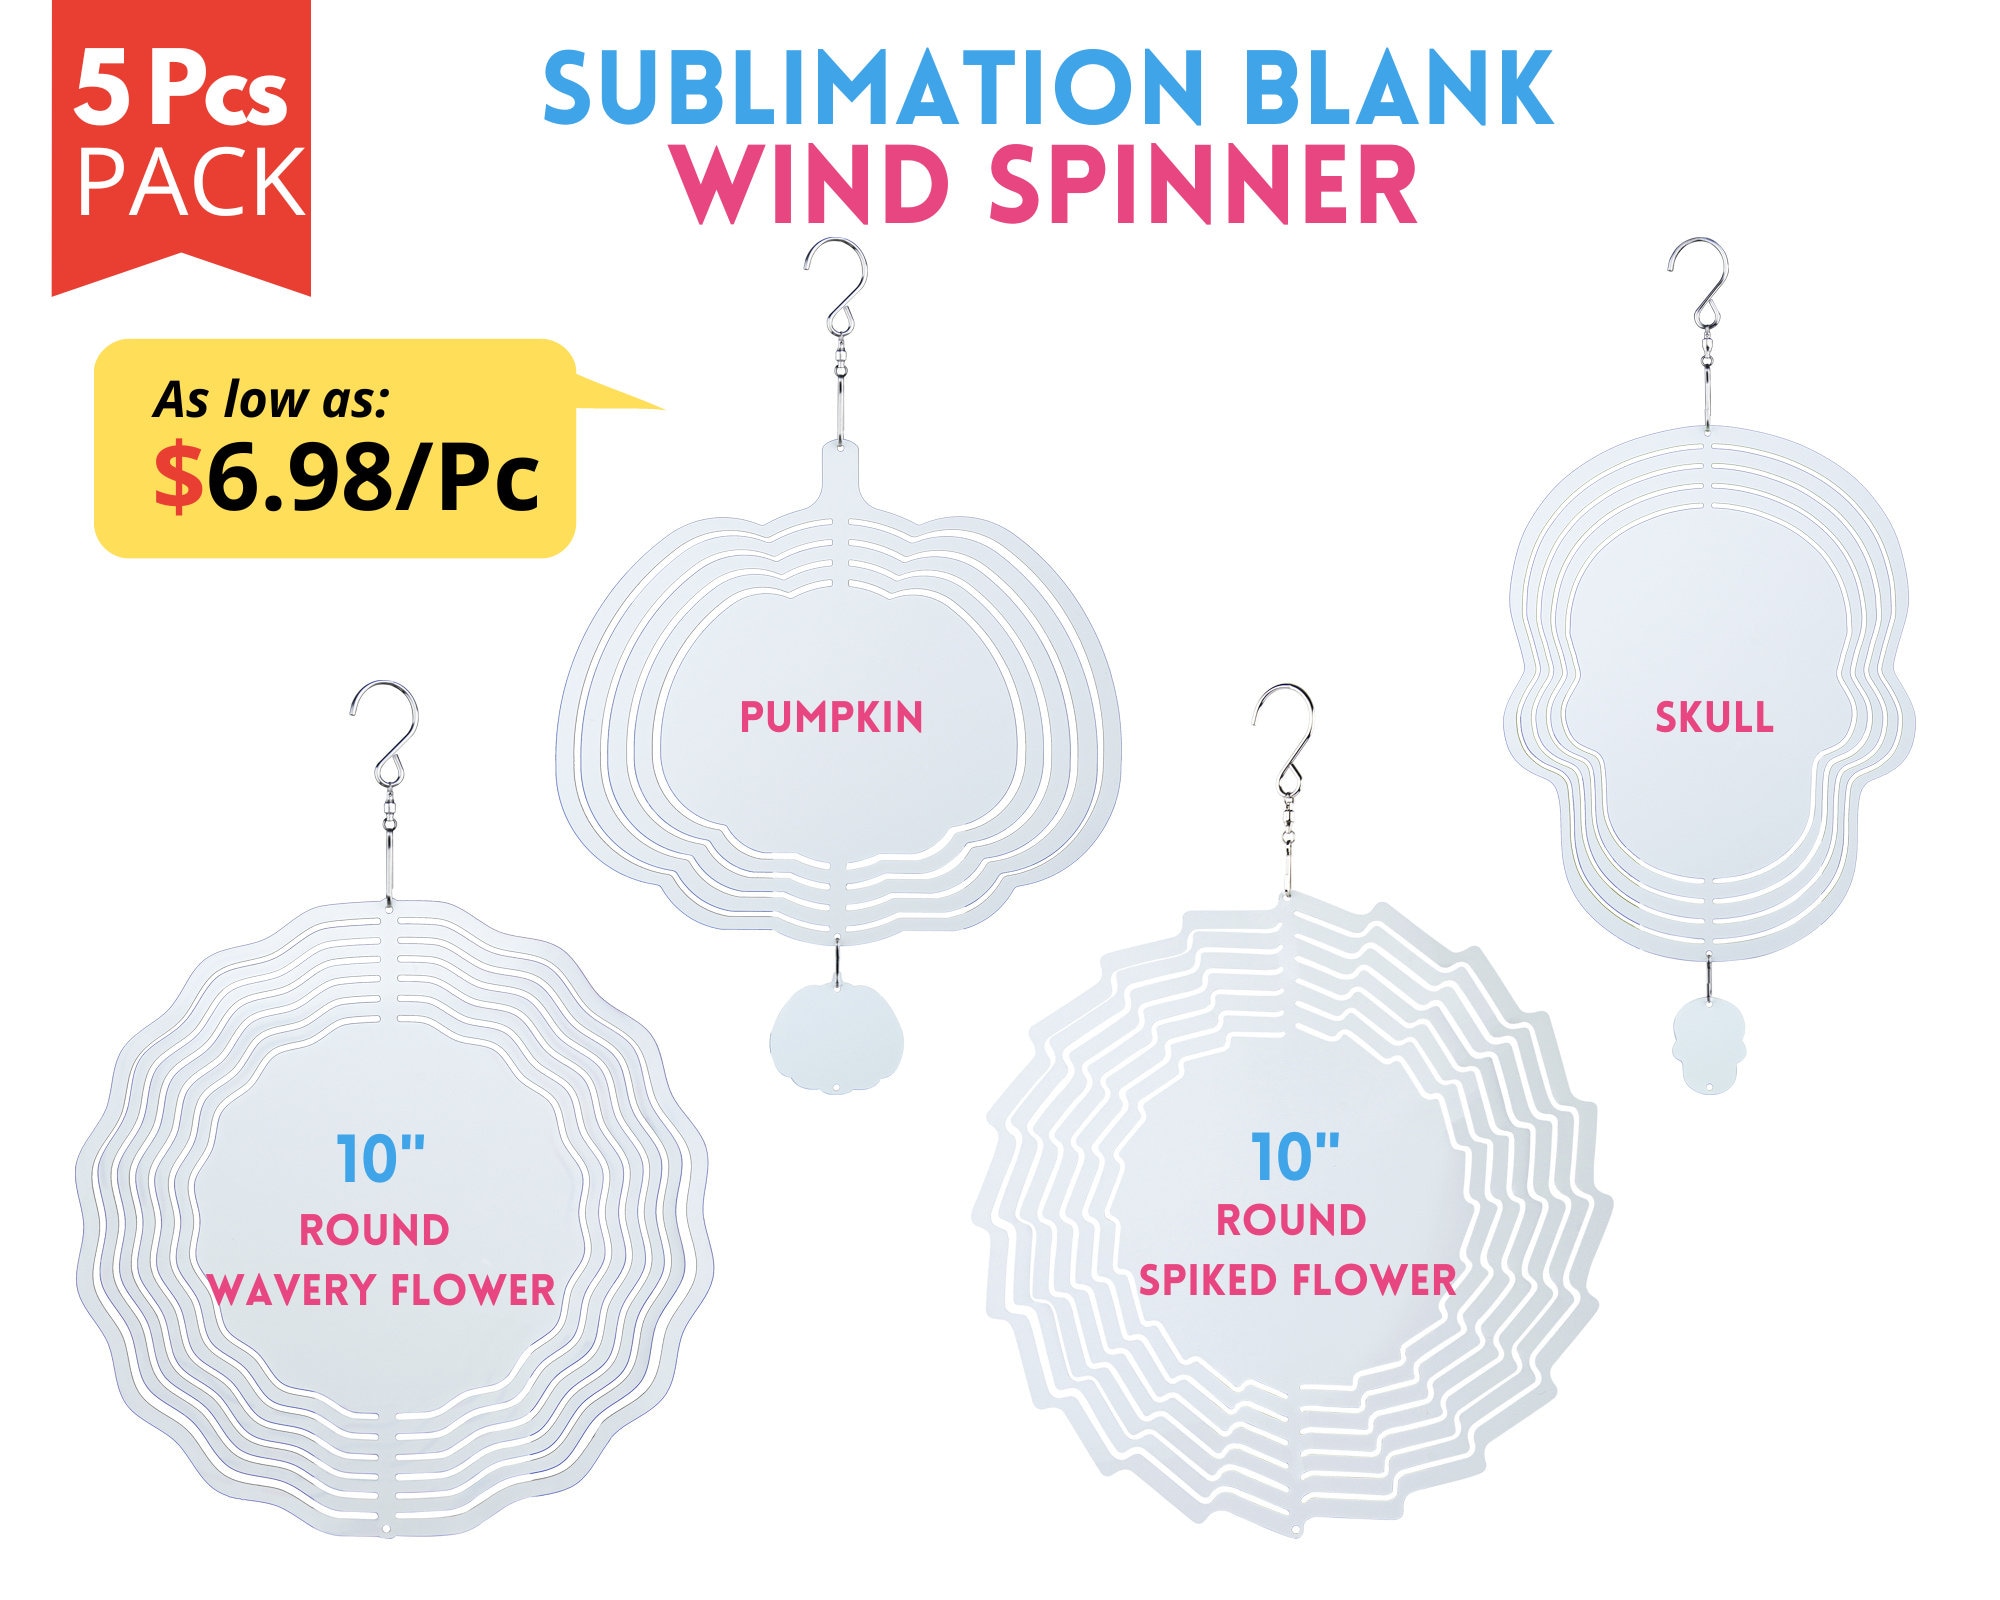 5x Sublimation Wind Spinner Sublimation Blanks Wind Spinners Double Sided  Spinner Blanks in 4 Shapes Round Flower, Pumpkin, Skull Shapes 